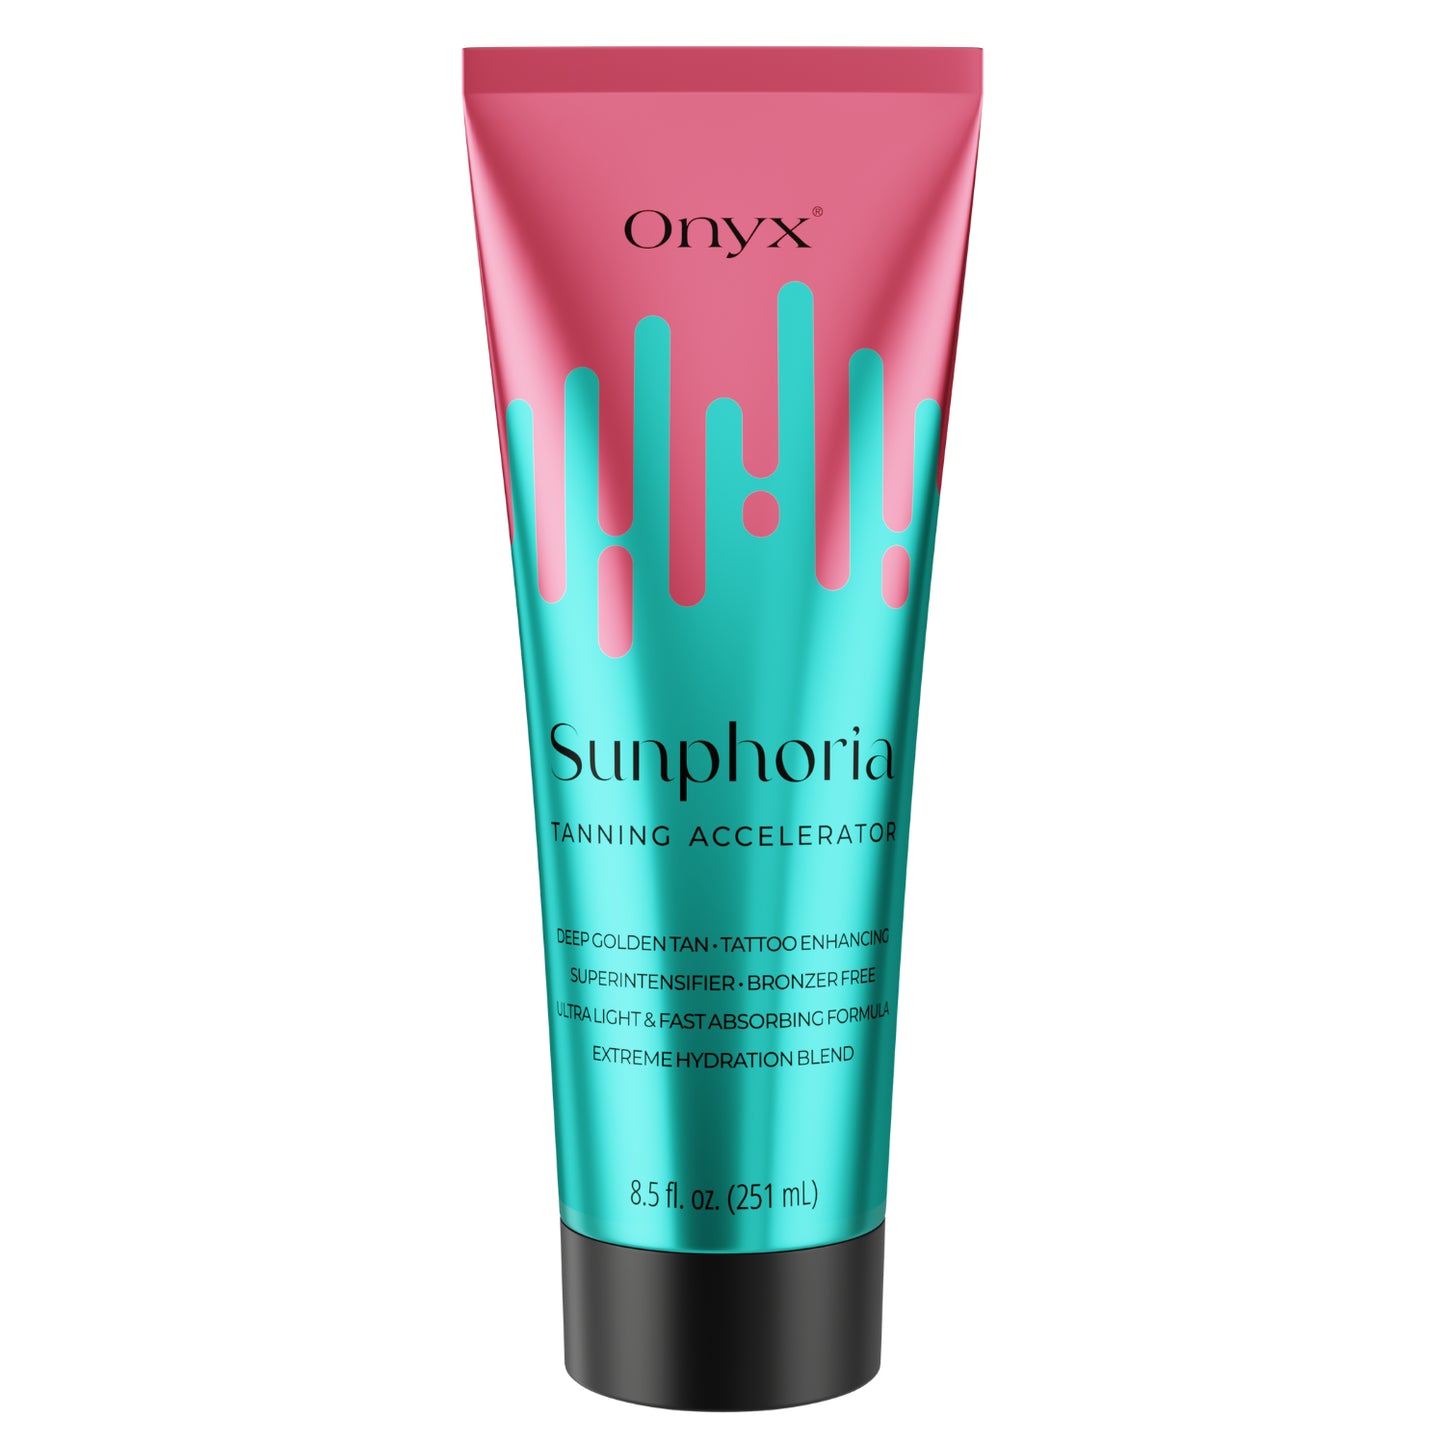 Sunphoria 8.5 fl oz - onyx tanning lotion accelerator